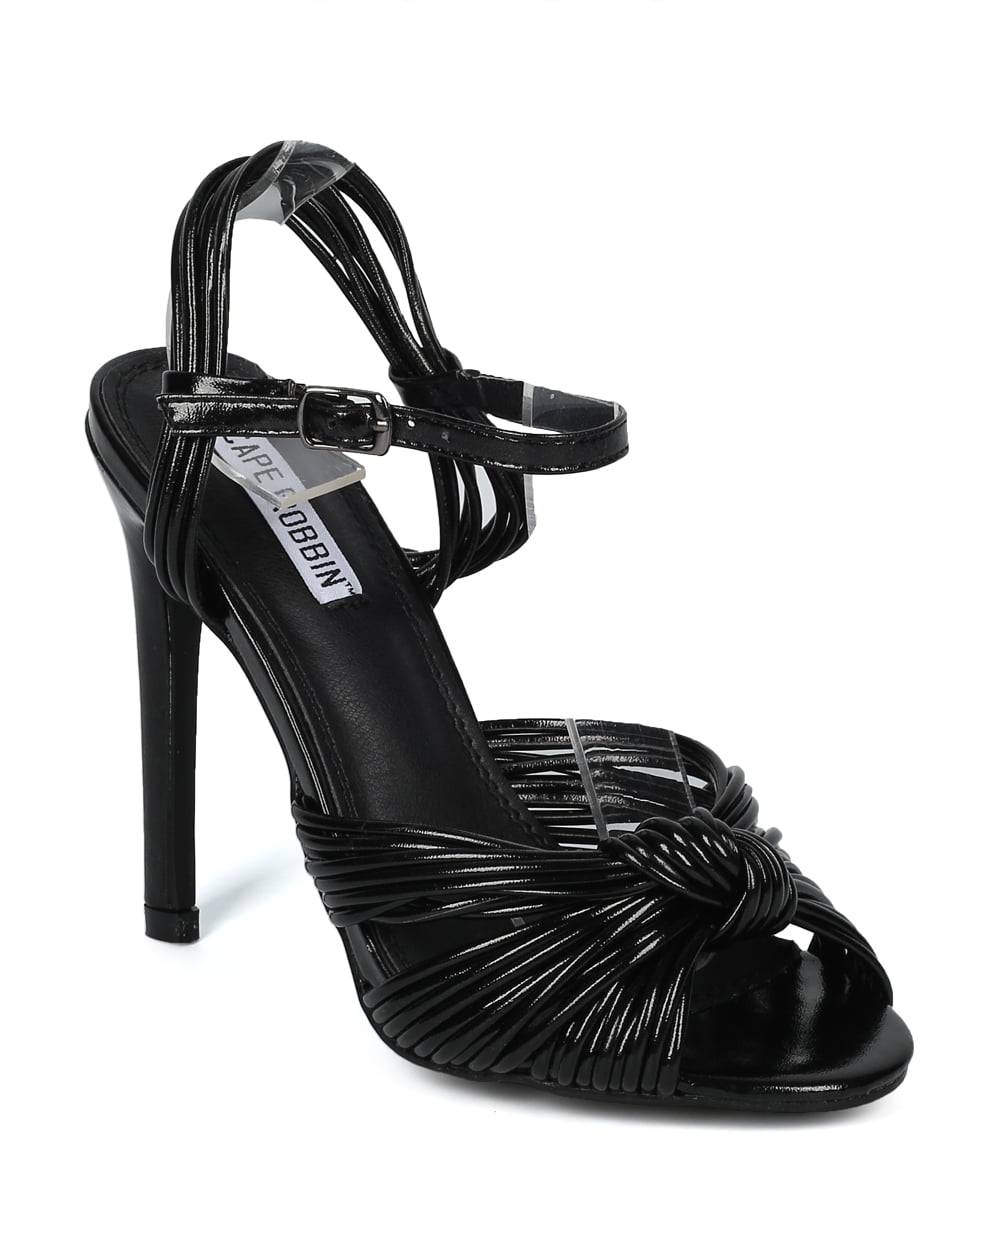 New Black Multicolors High Heel open toe Mesh lace up Sandals Cape Robbin Alza 